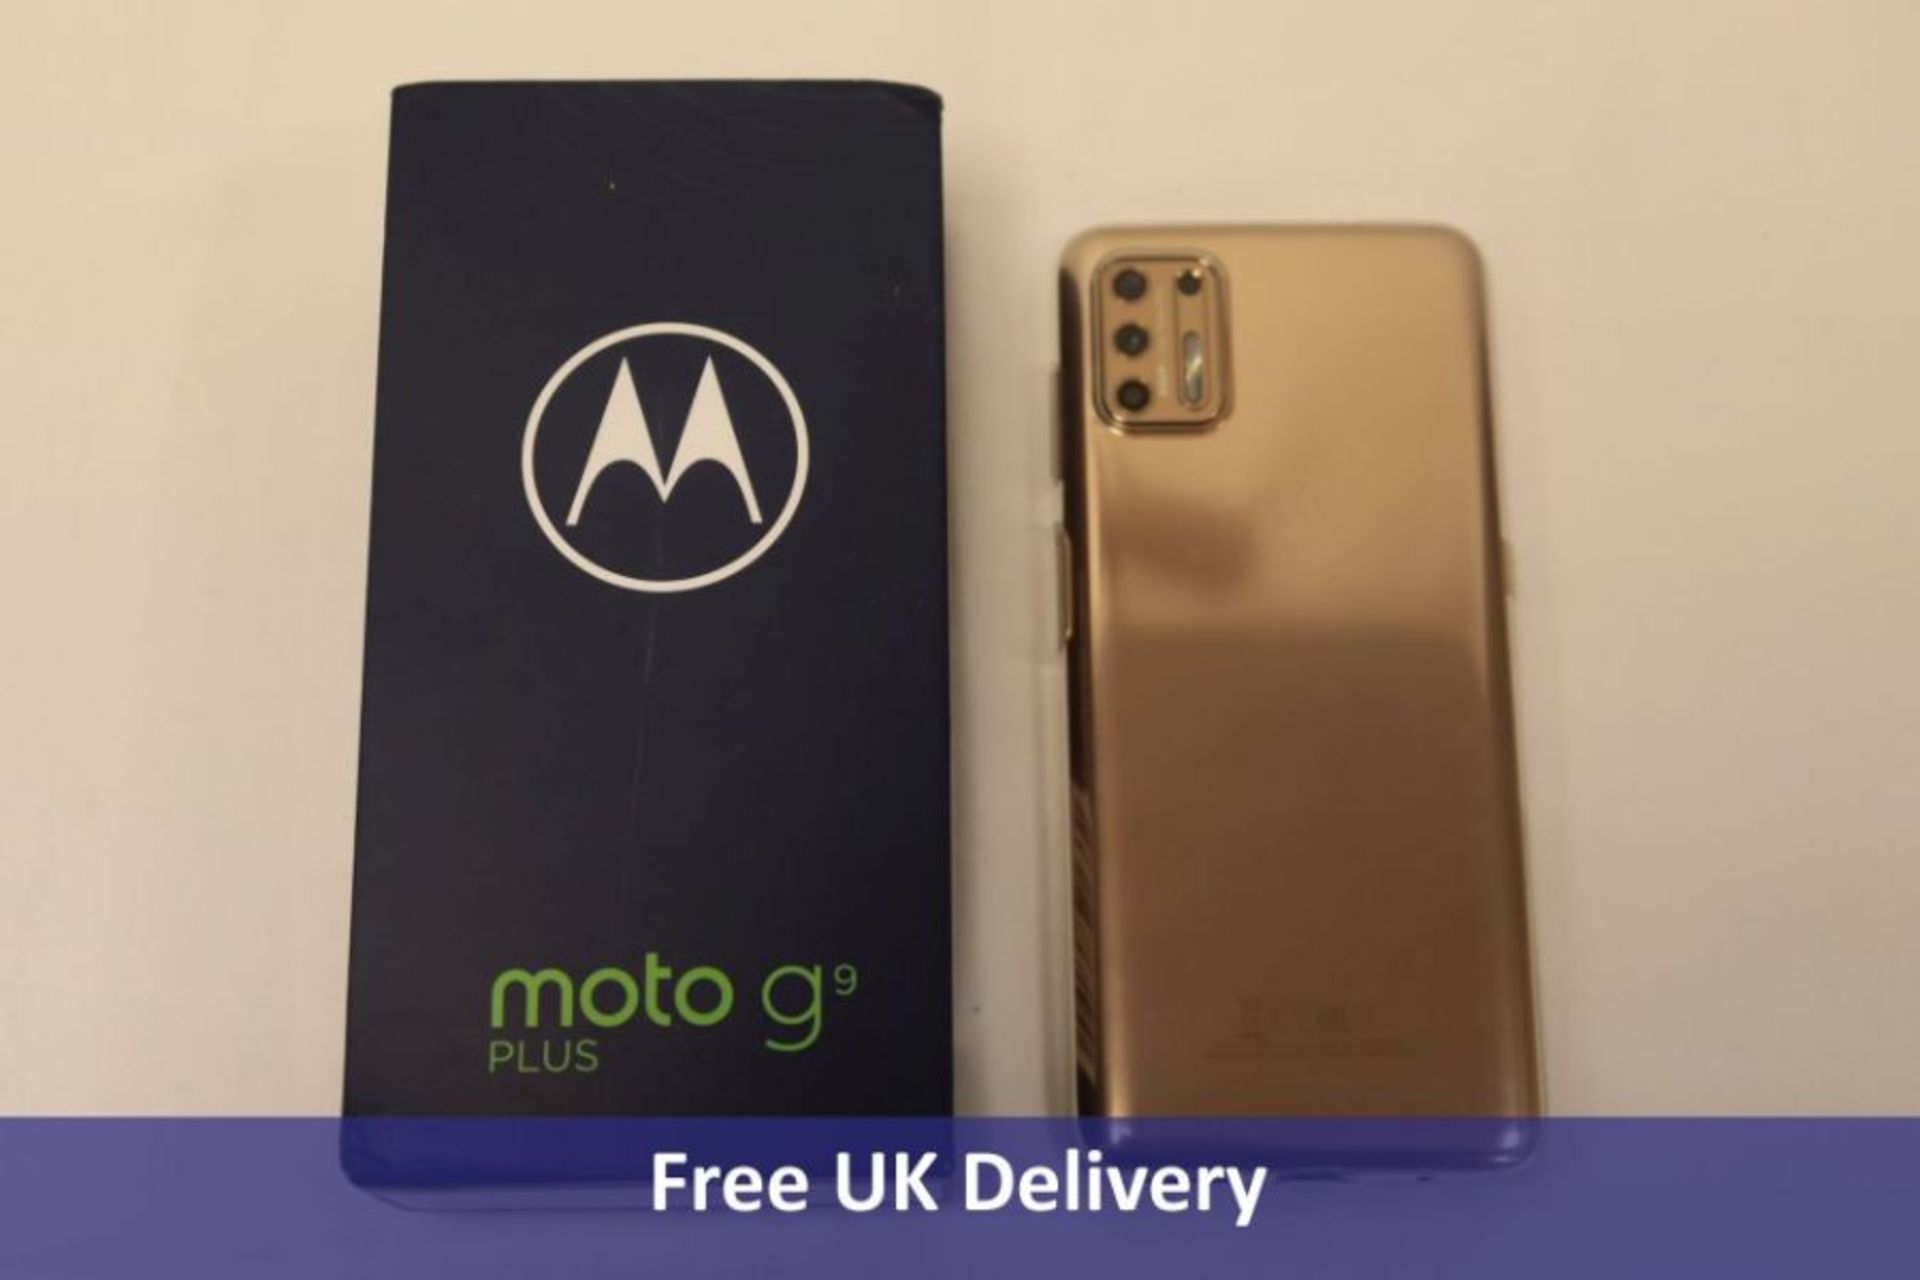 Motorola G9 Plus Android Mobile Phone, 128GB Storage, 4GB RAM, Blush Gold